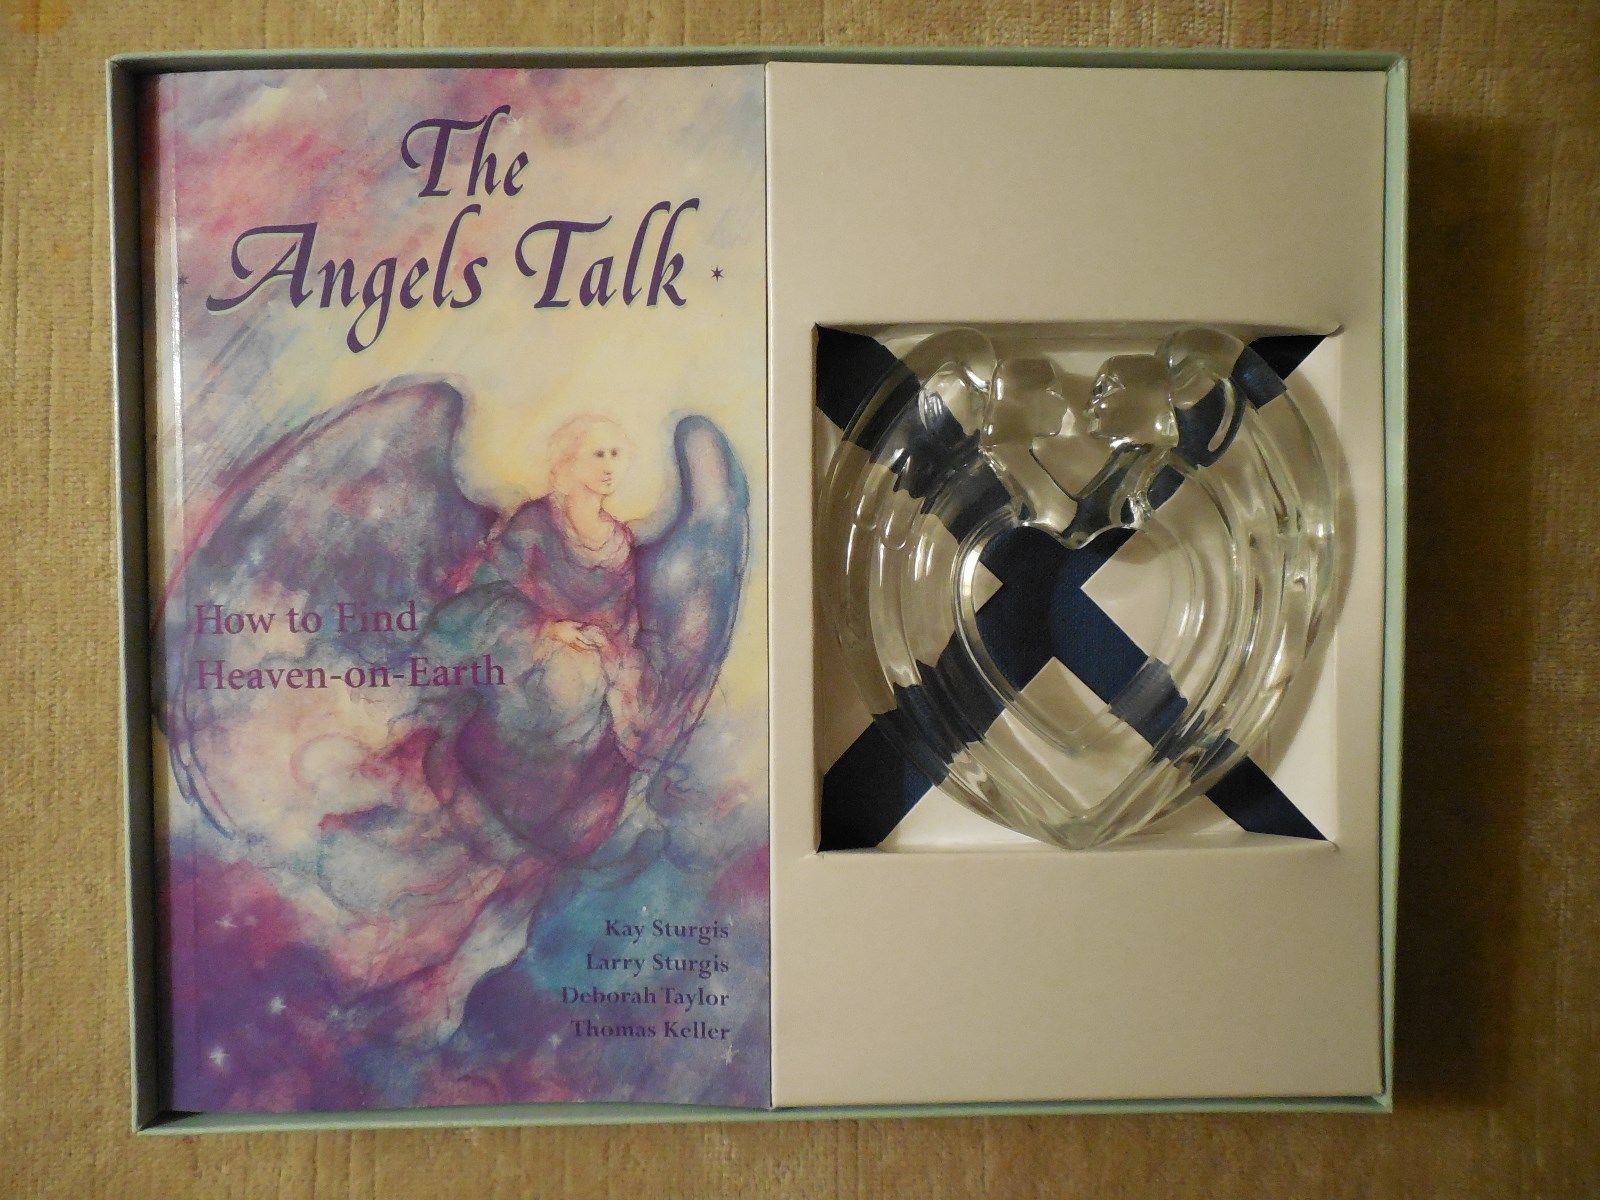 The Angels Talk Message Board